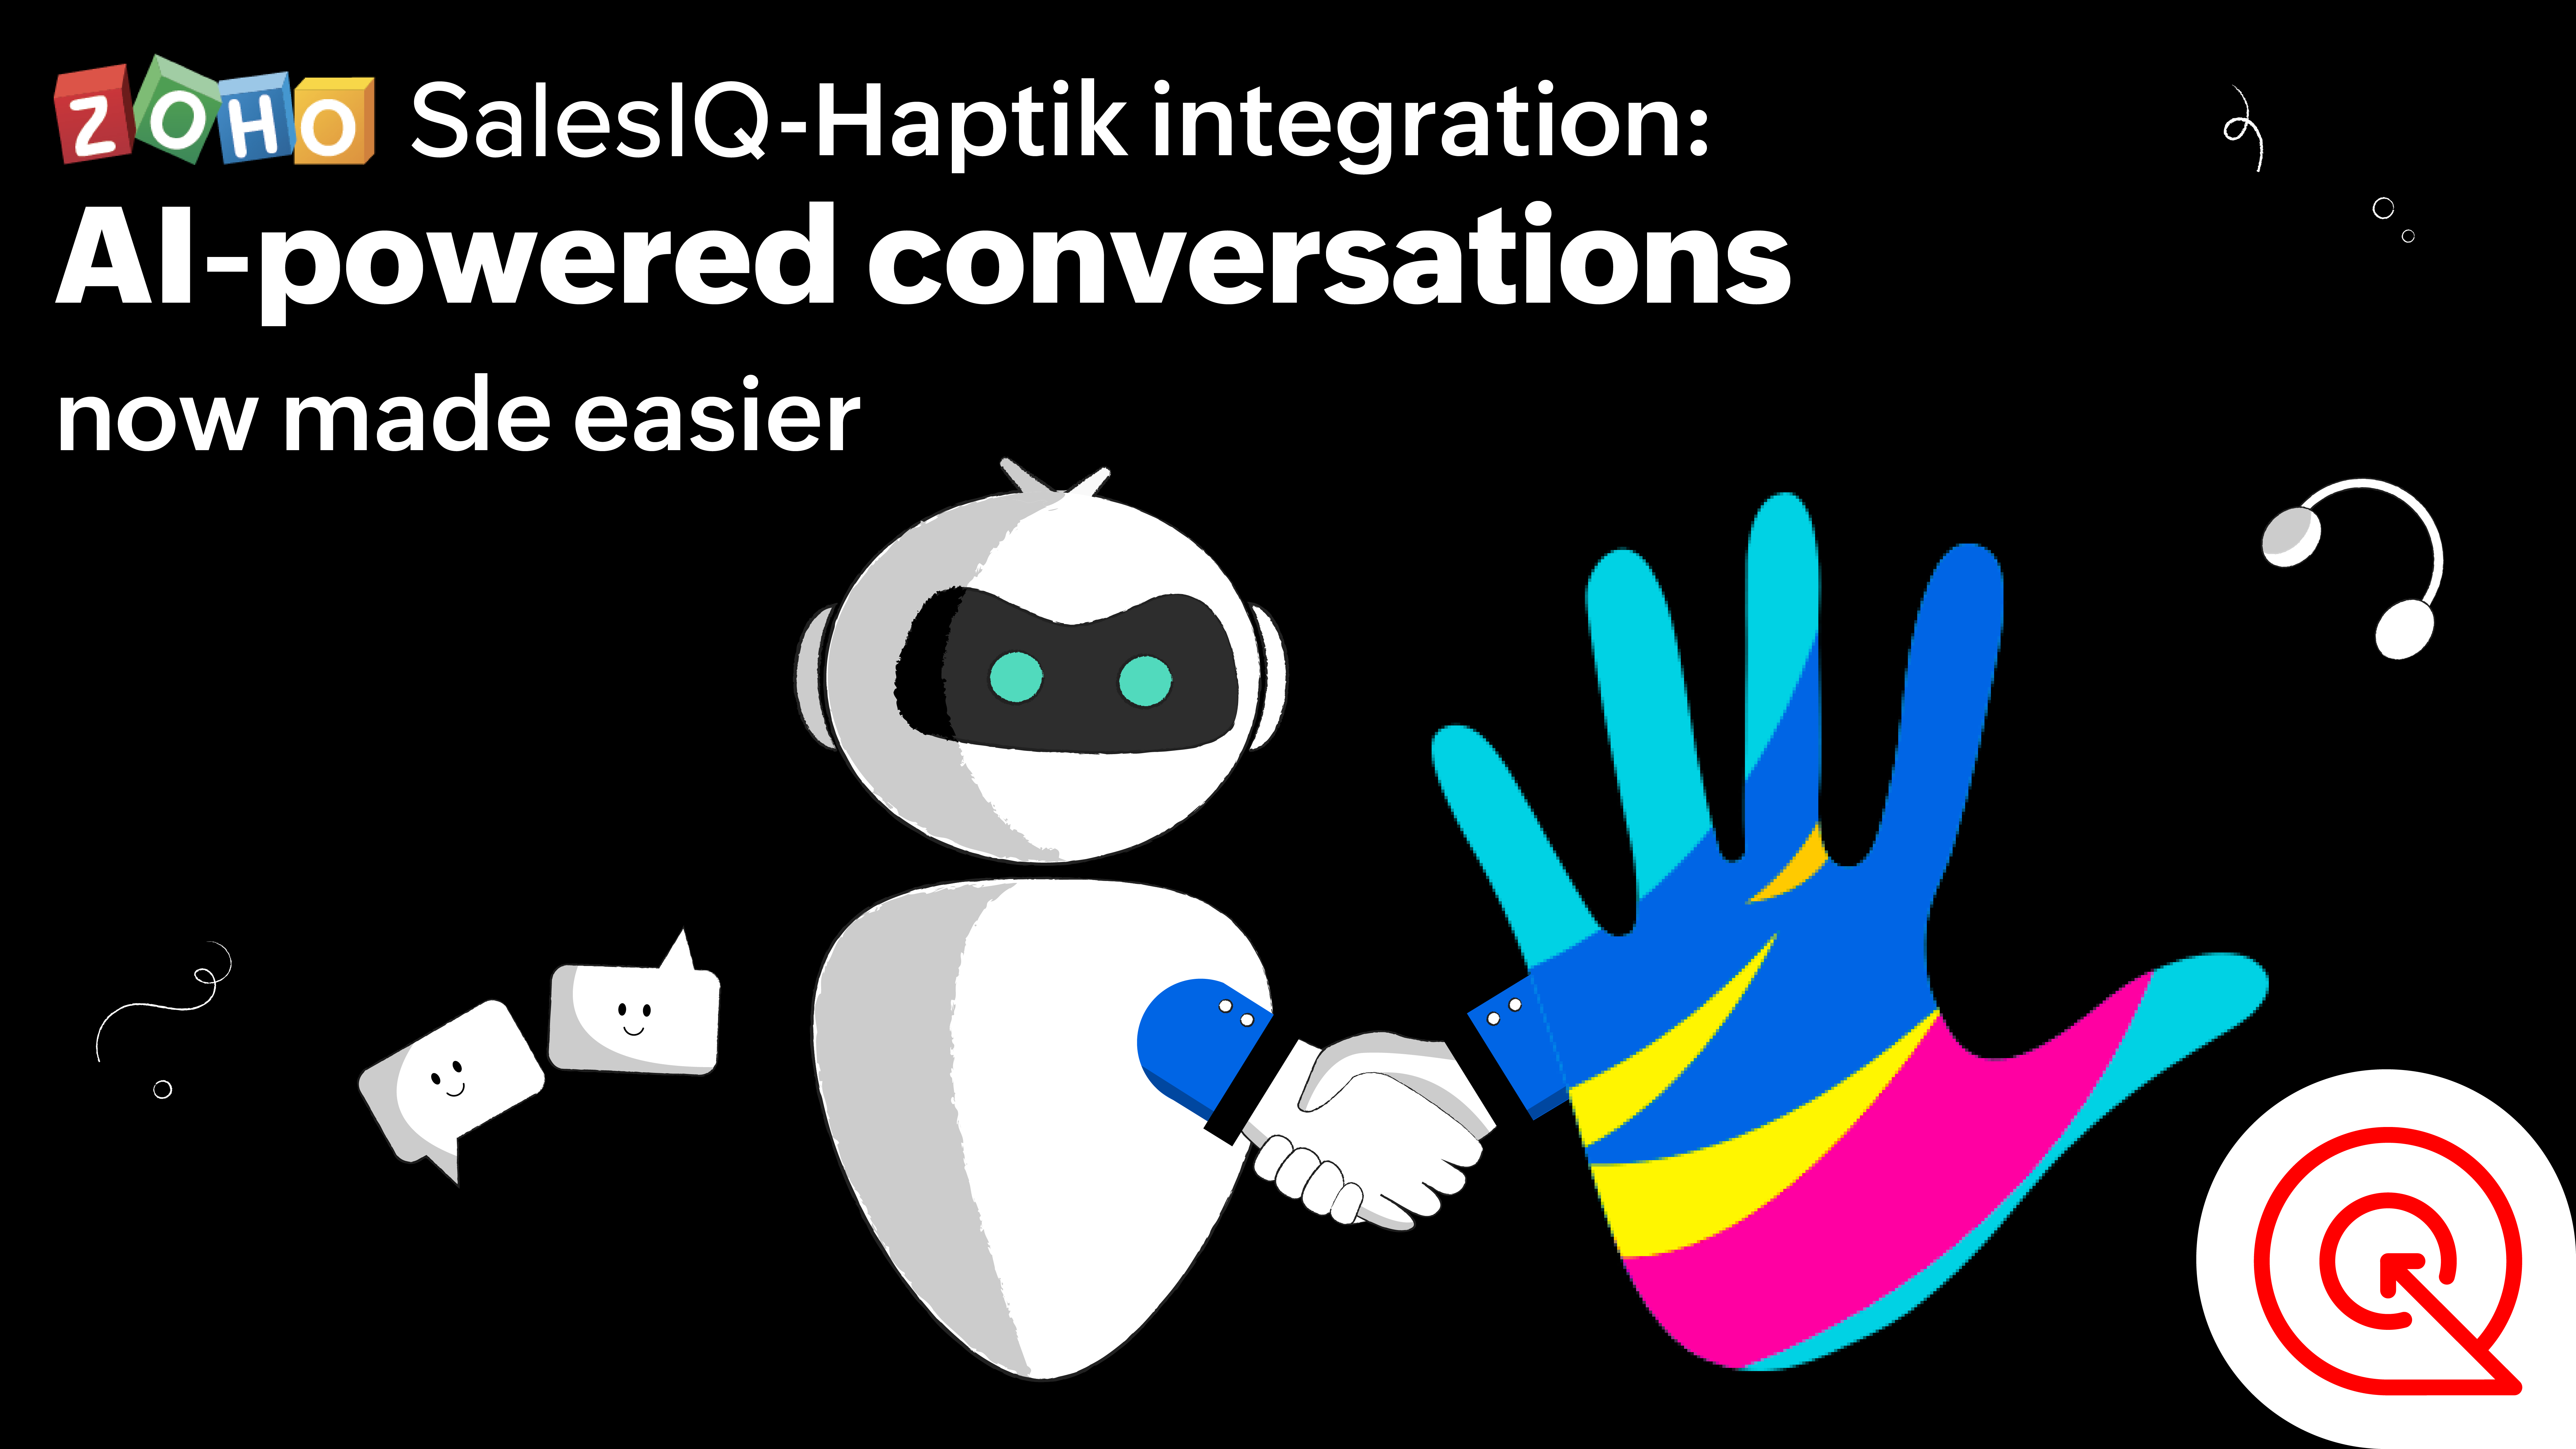 SalesIQ-Haptik integration: AI-powered conversations now made easier